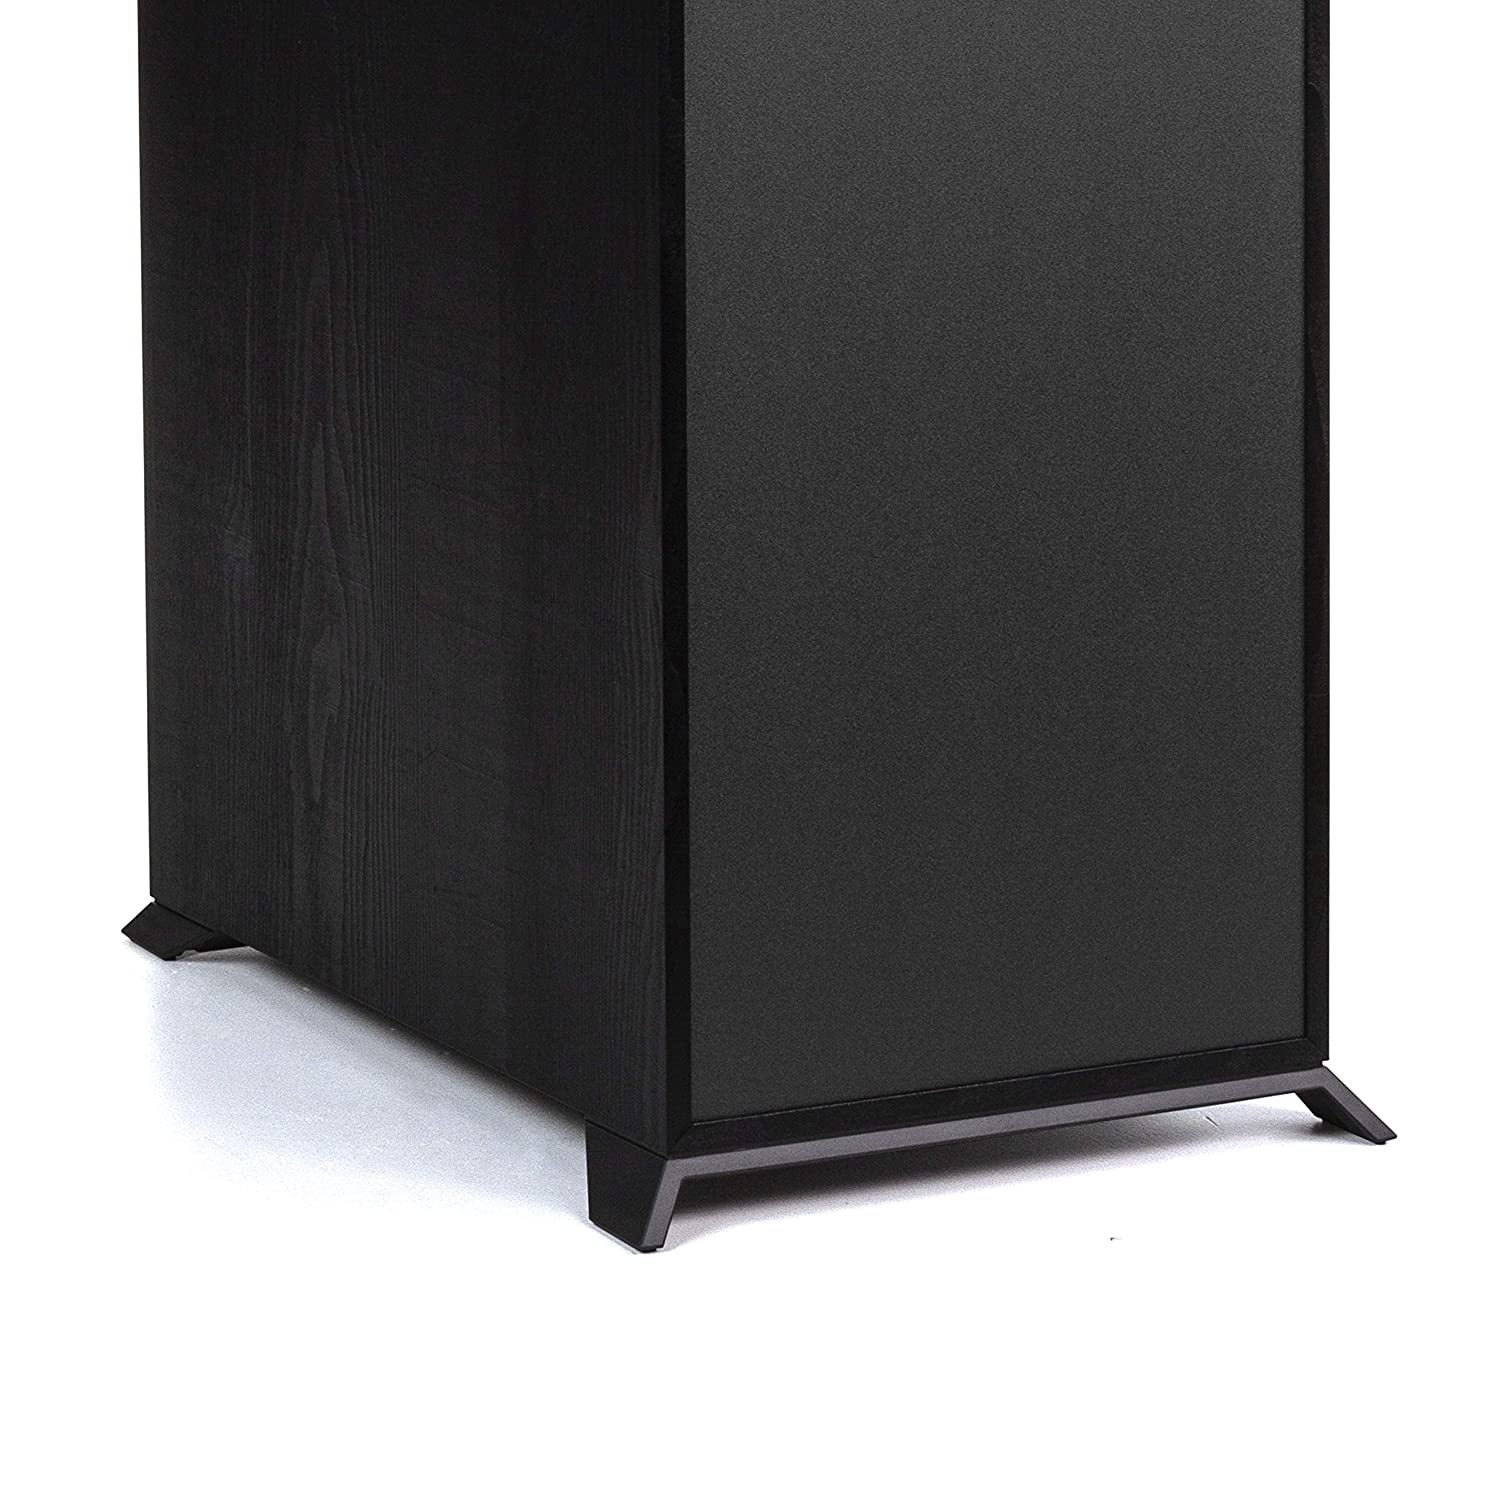 Klipsch R-800-F Floorstanding Speaker (Pair)